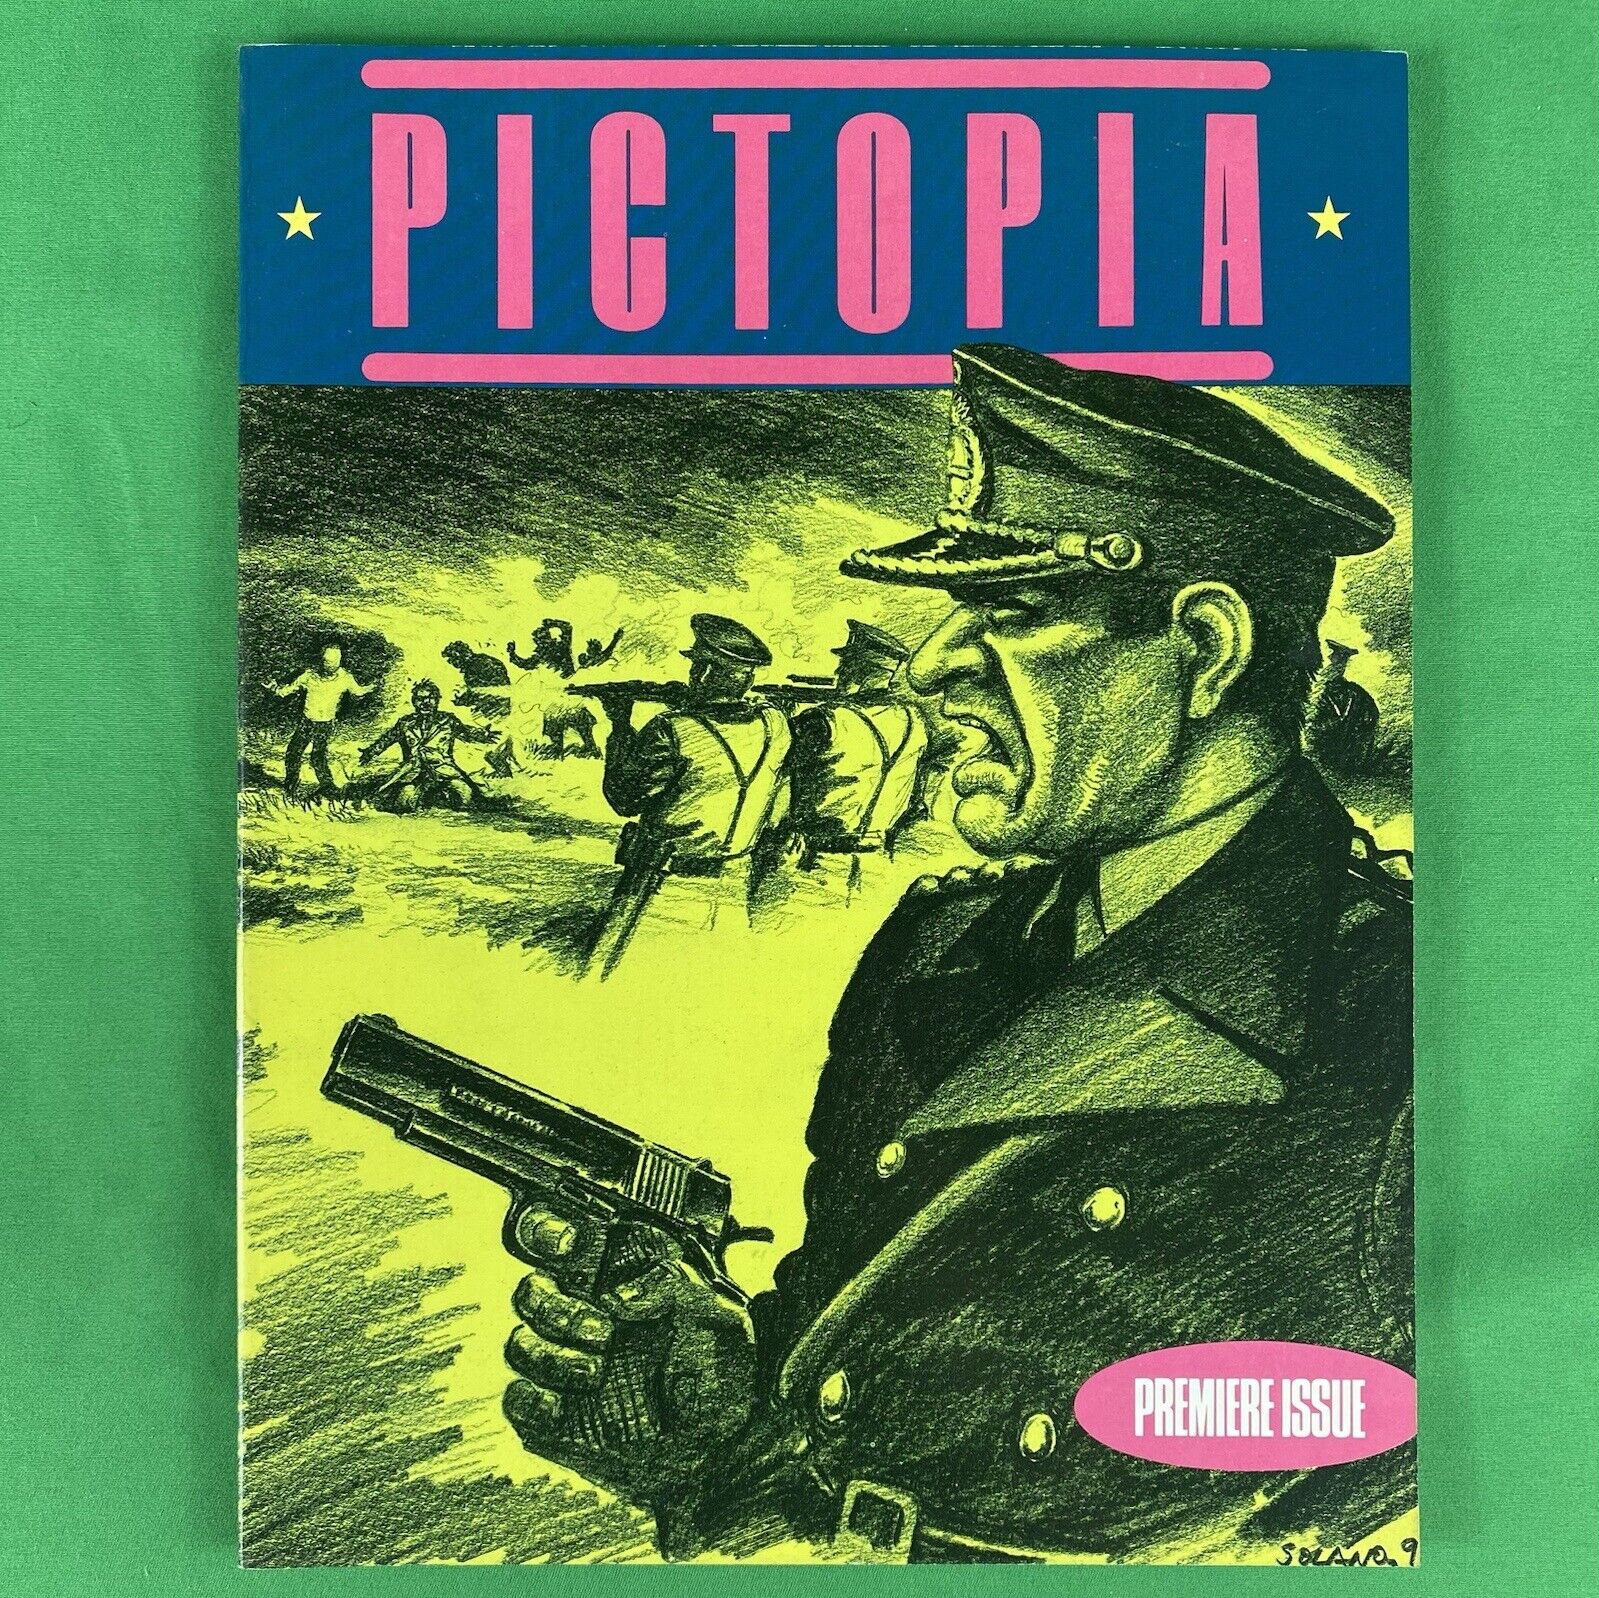 Pictopia #1 NM 1991 Fantagraphics Premiere Issue Unread Softcover Graphic Novel